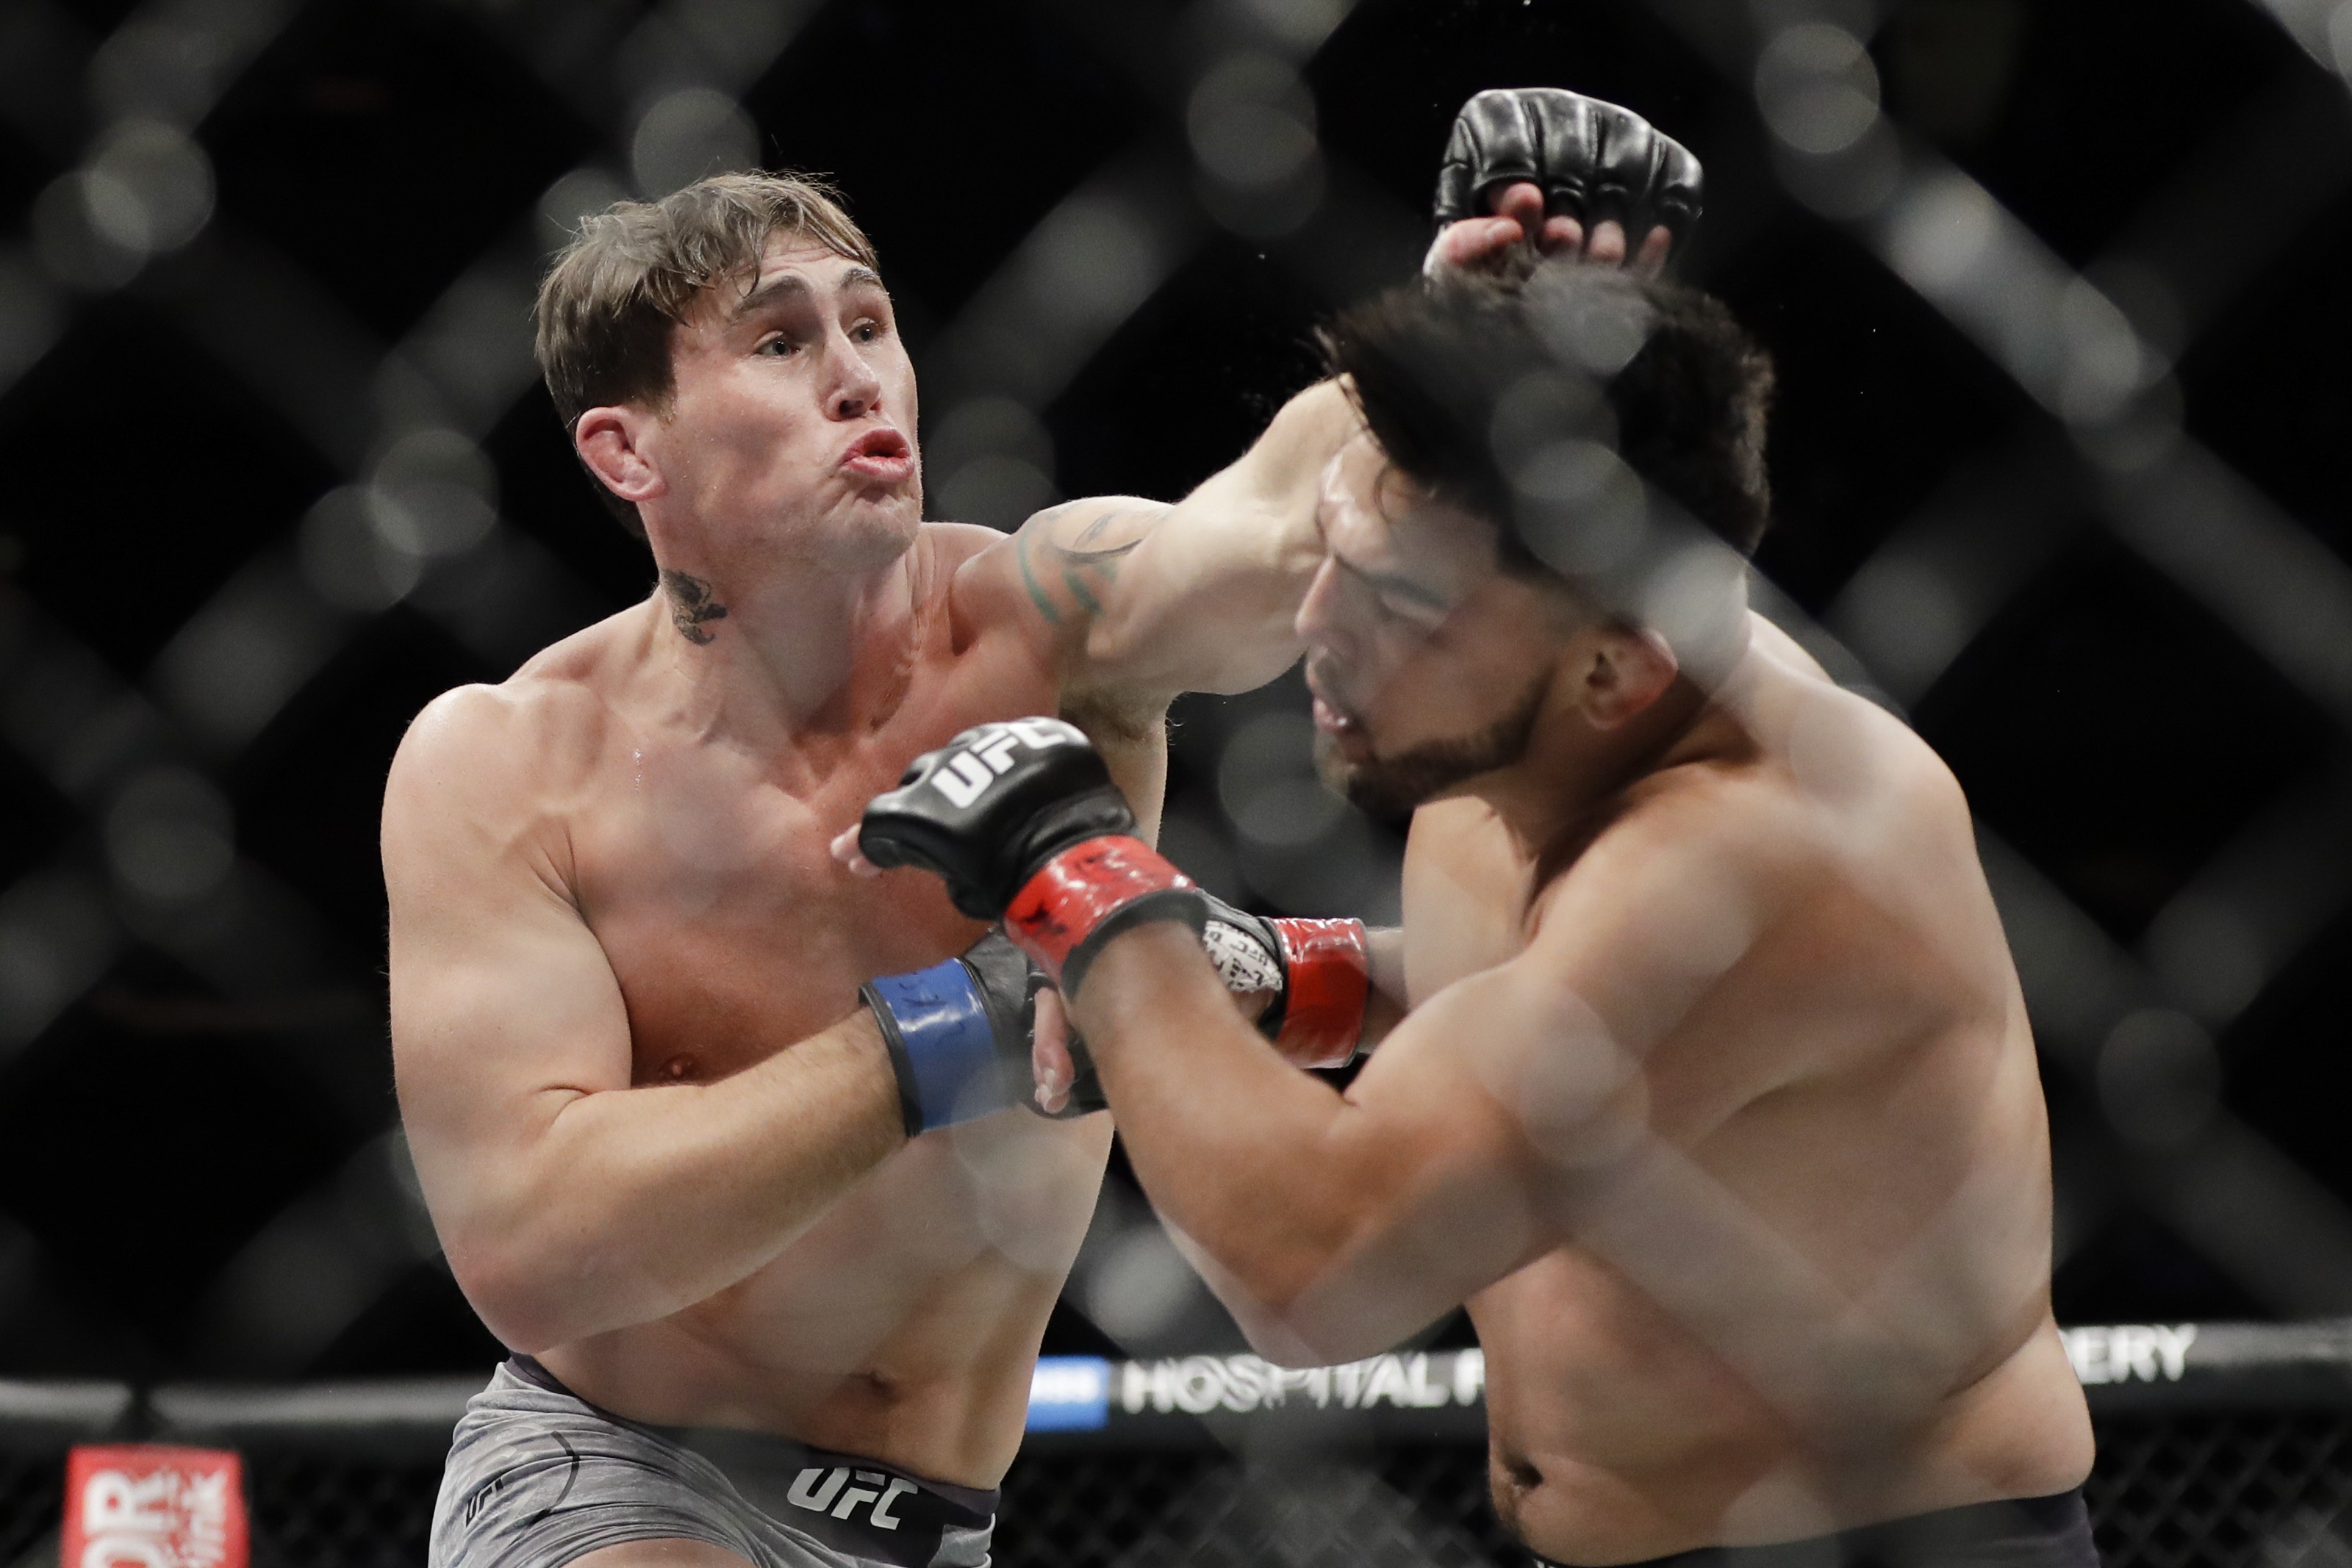 Britain's Darren Till punches Kelvin Gastelum during his split decision win at UFC 244 in November last year. Photo: AP